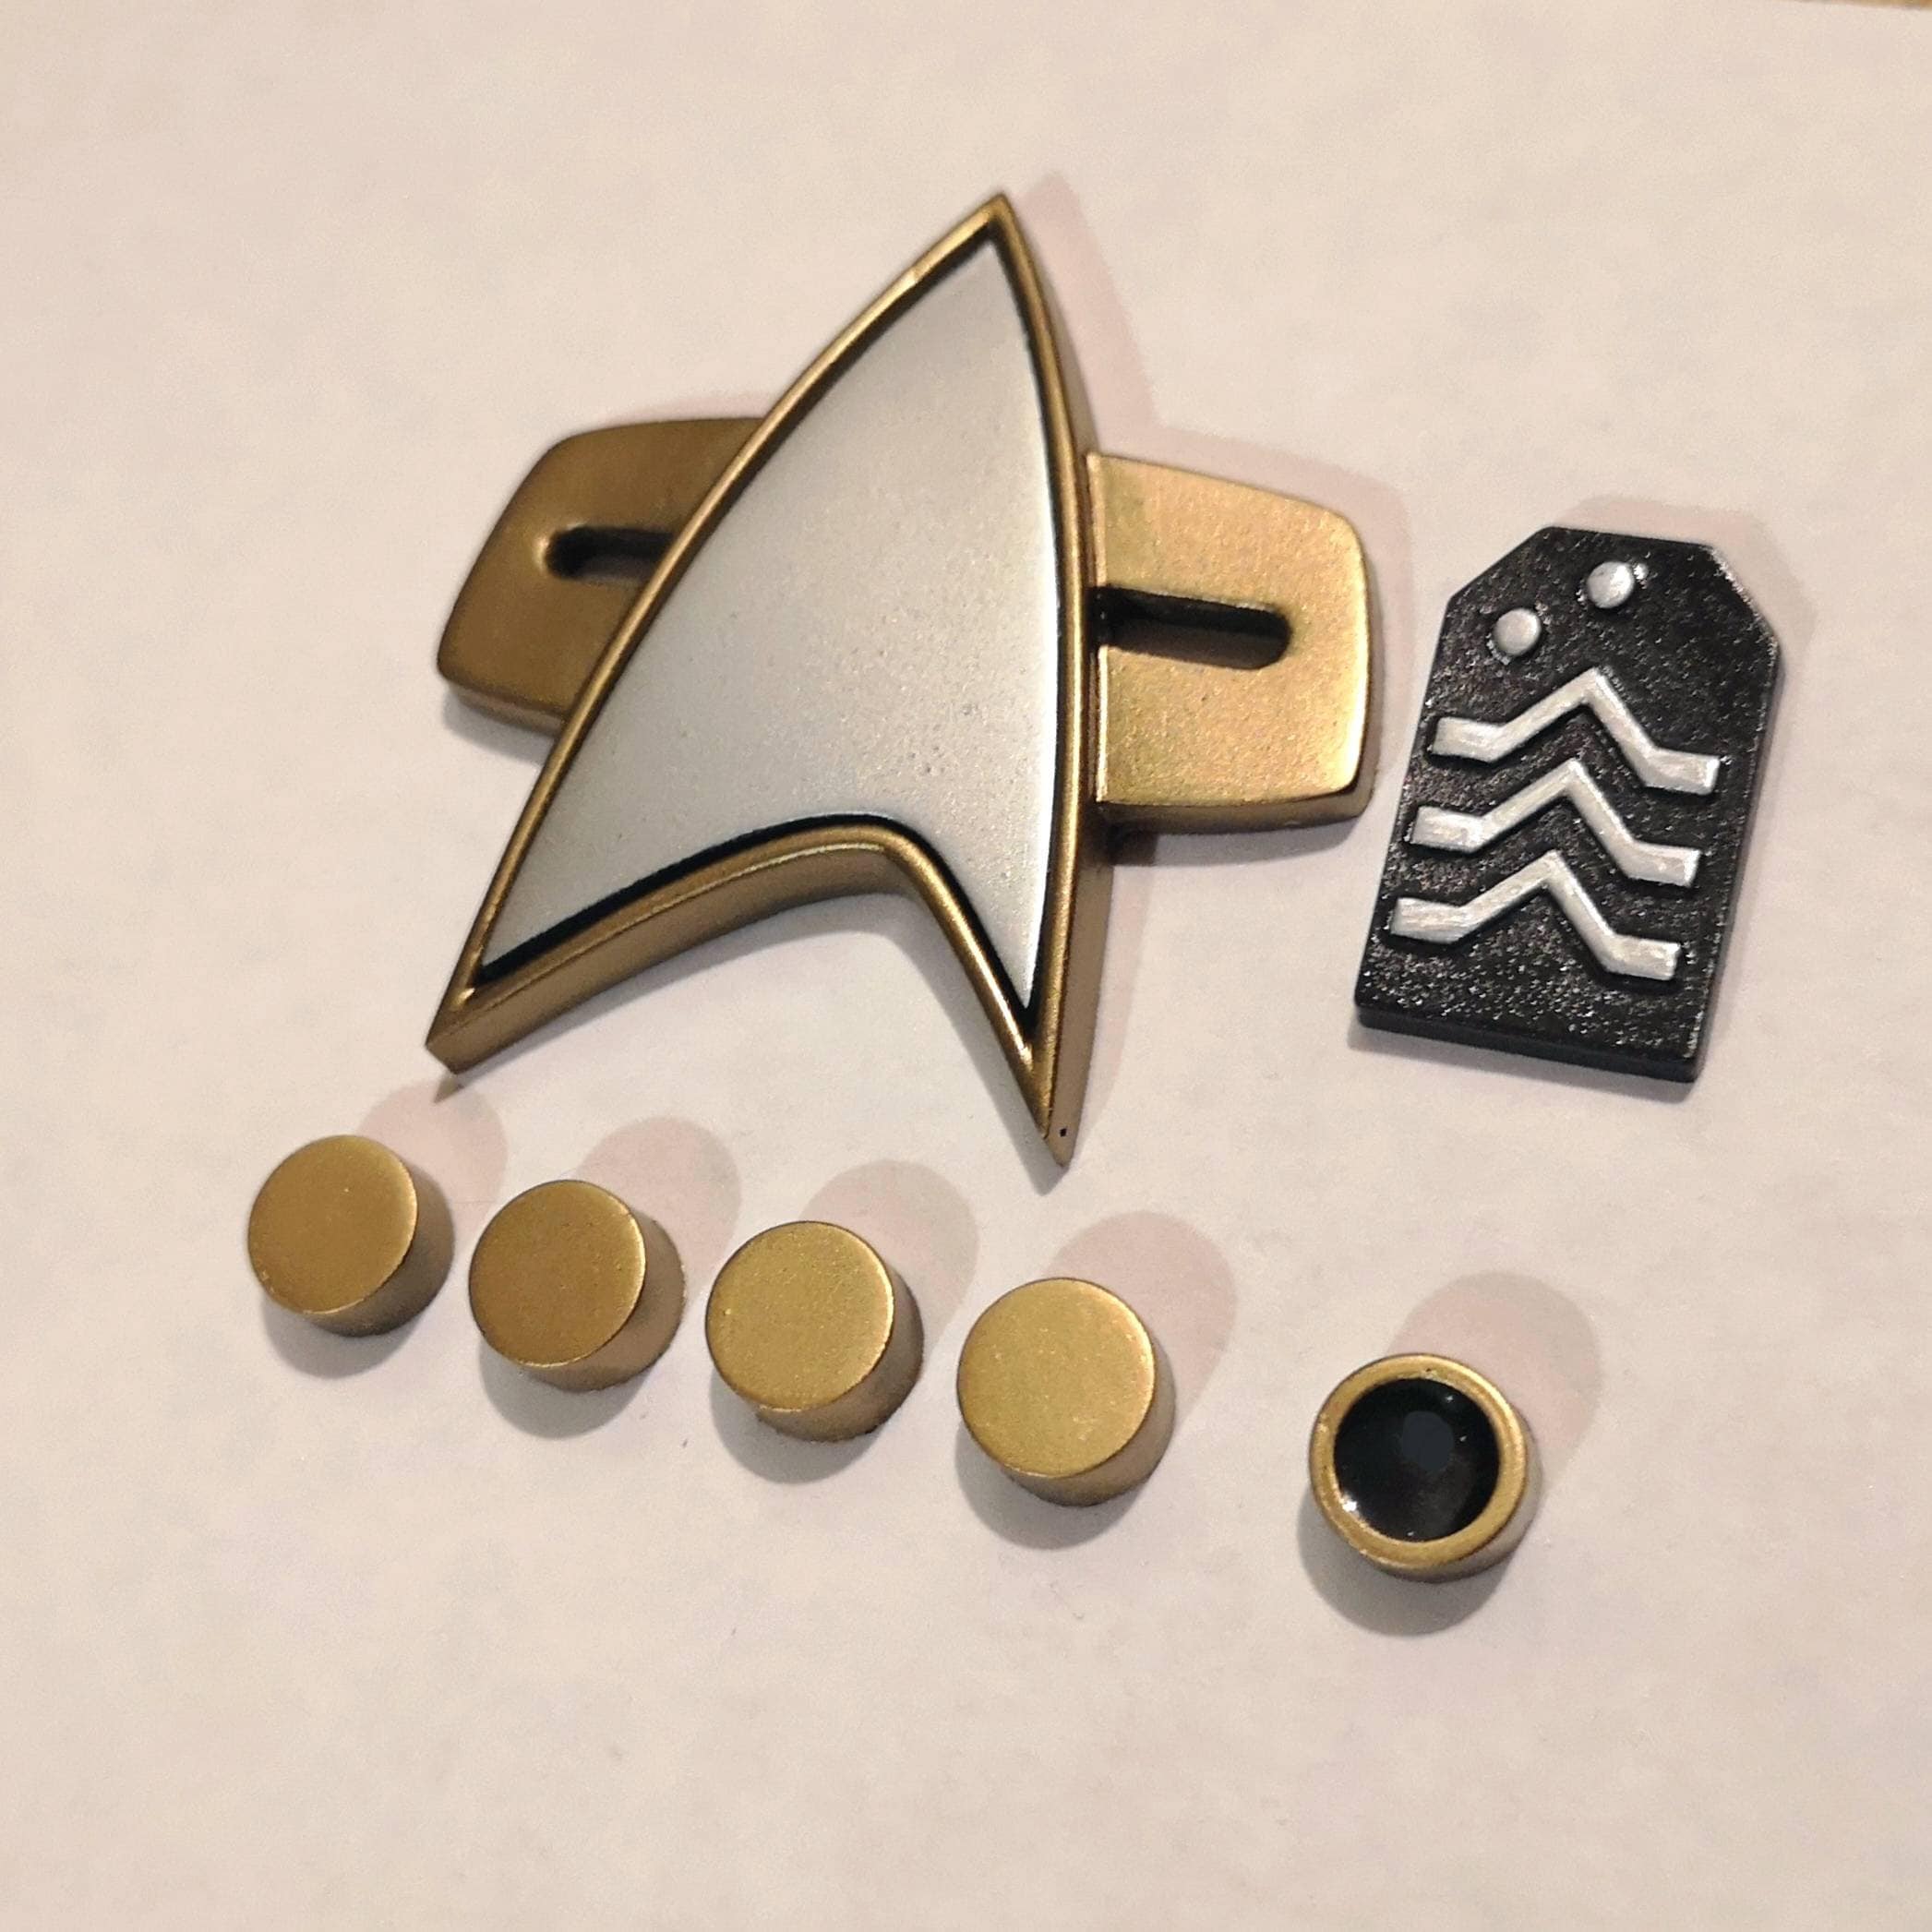 Starfleet Comm Badge Star Trek Online -  Israel